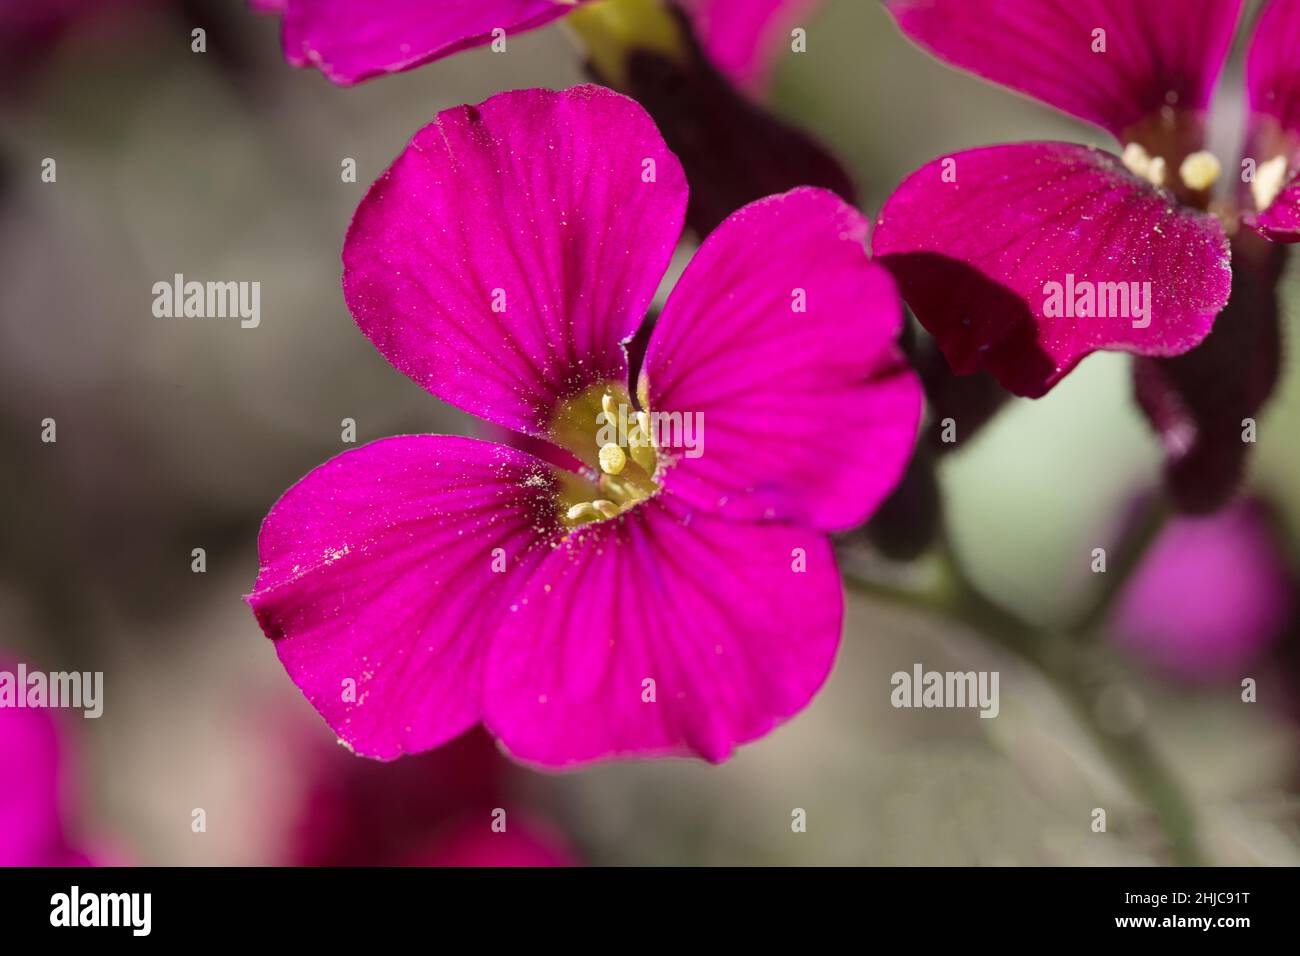 One dark pink Aubretia flower, Aubrieta Gloria, flowering in a rock garden in summertime, close-up view Stock Photo